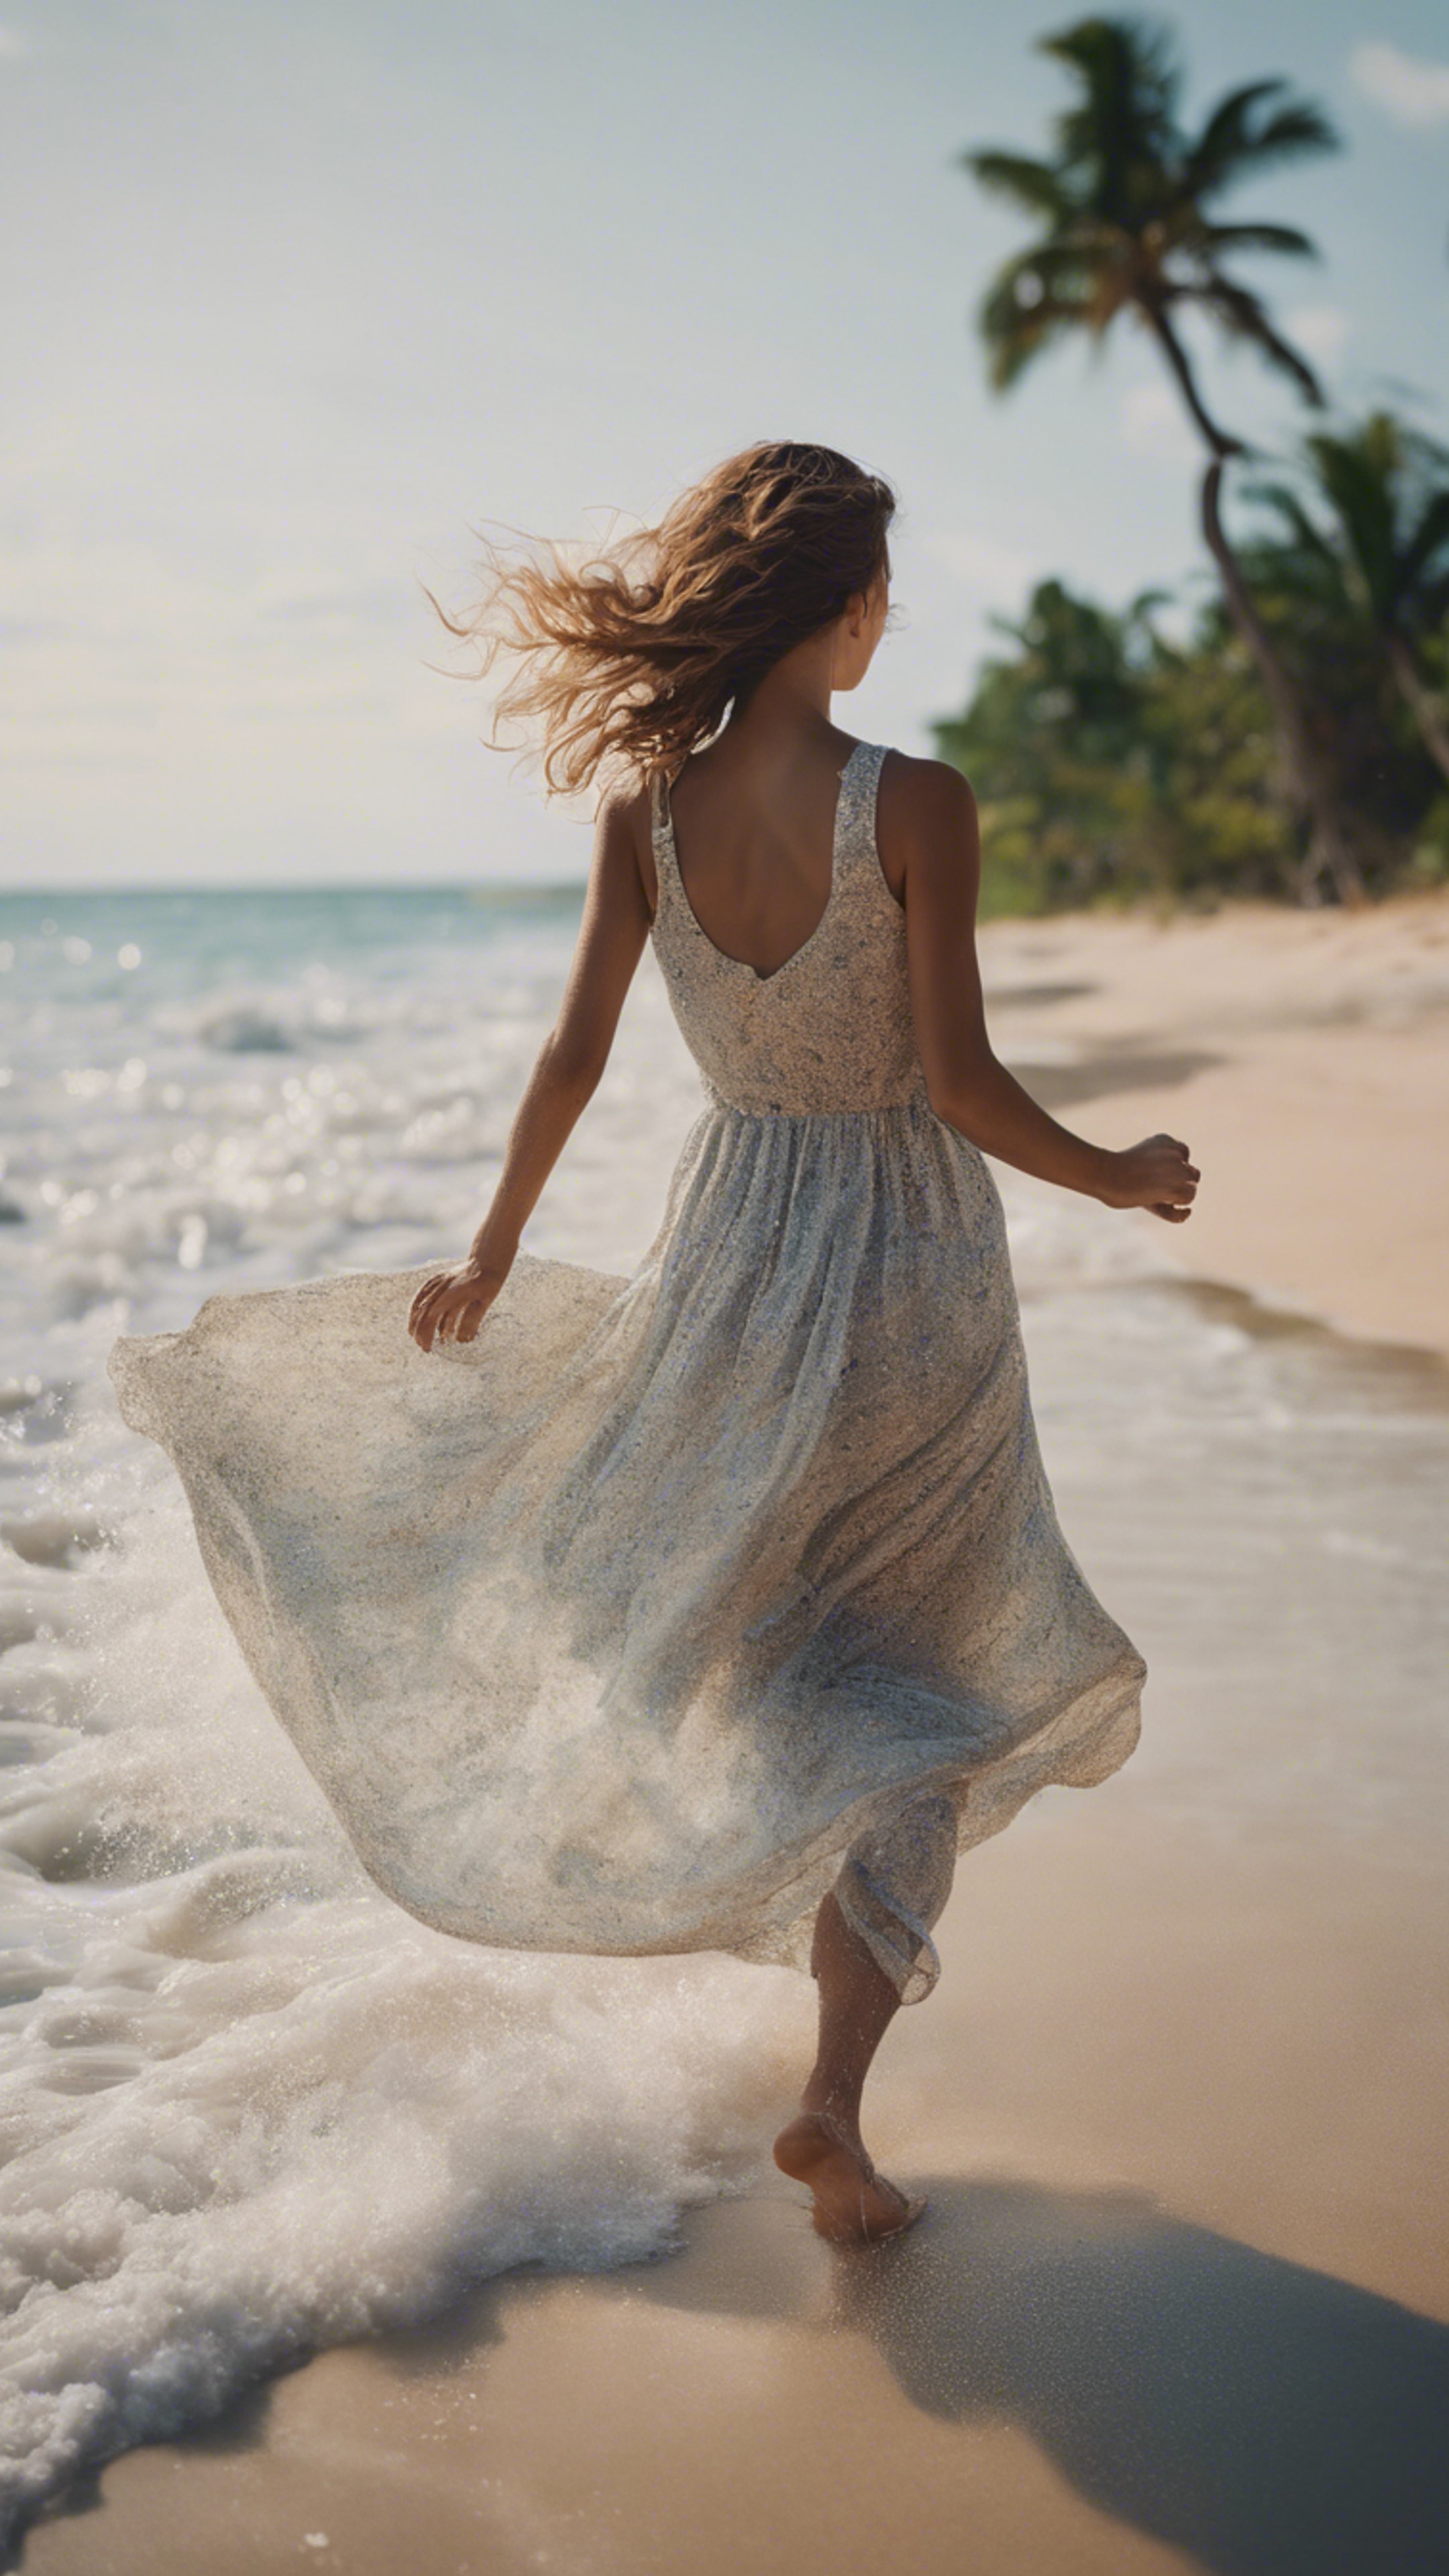 A girl in a flowy dress running alongside the sea at a tropical beach. 벽지[6de970100921406193d7]